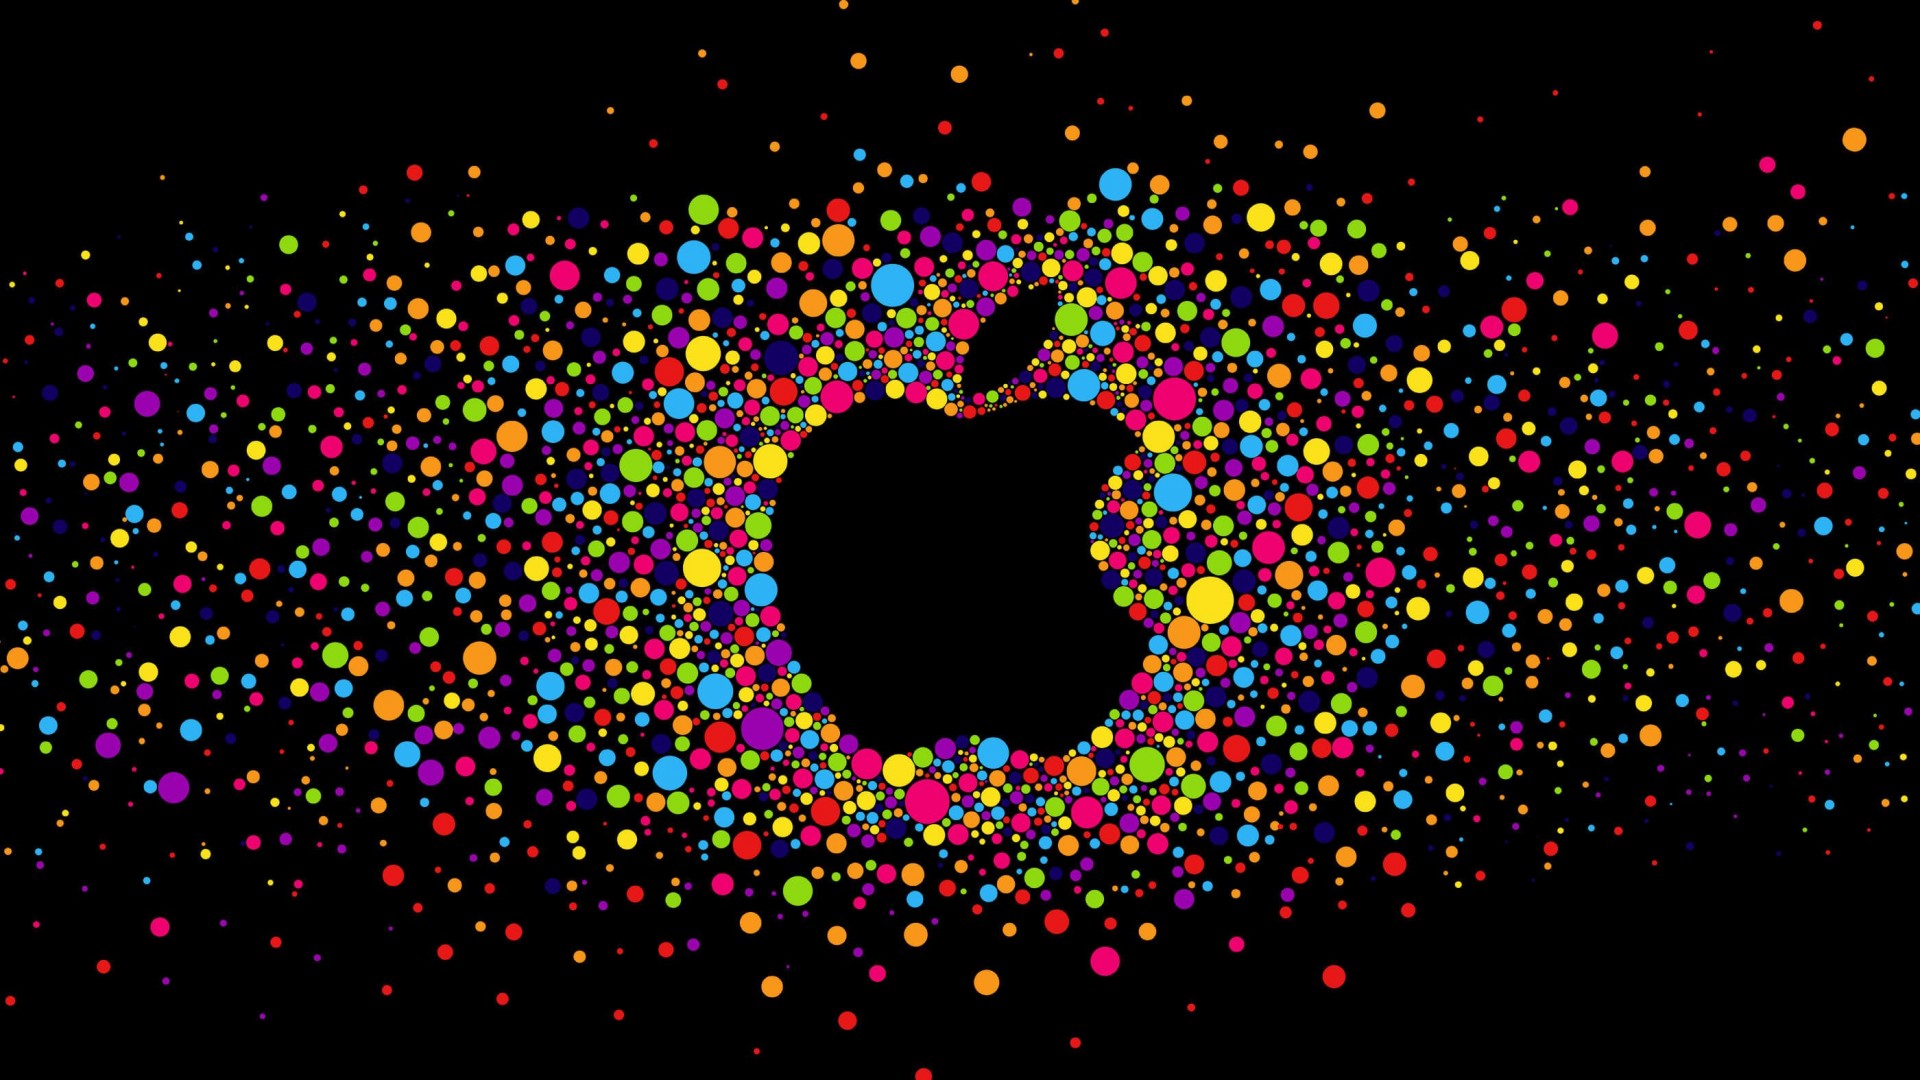 Black Apple Logo Particles Wallpaper for Desktop 1920x1080